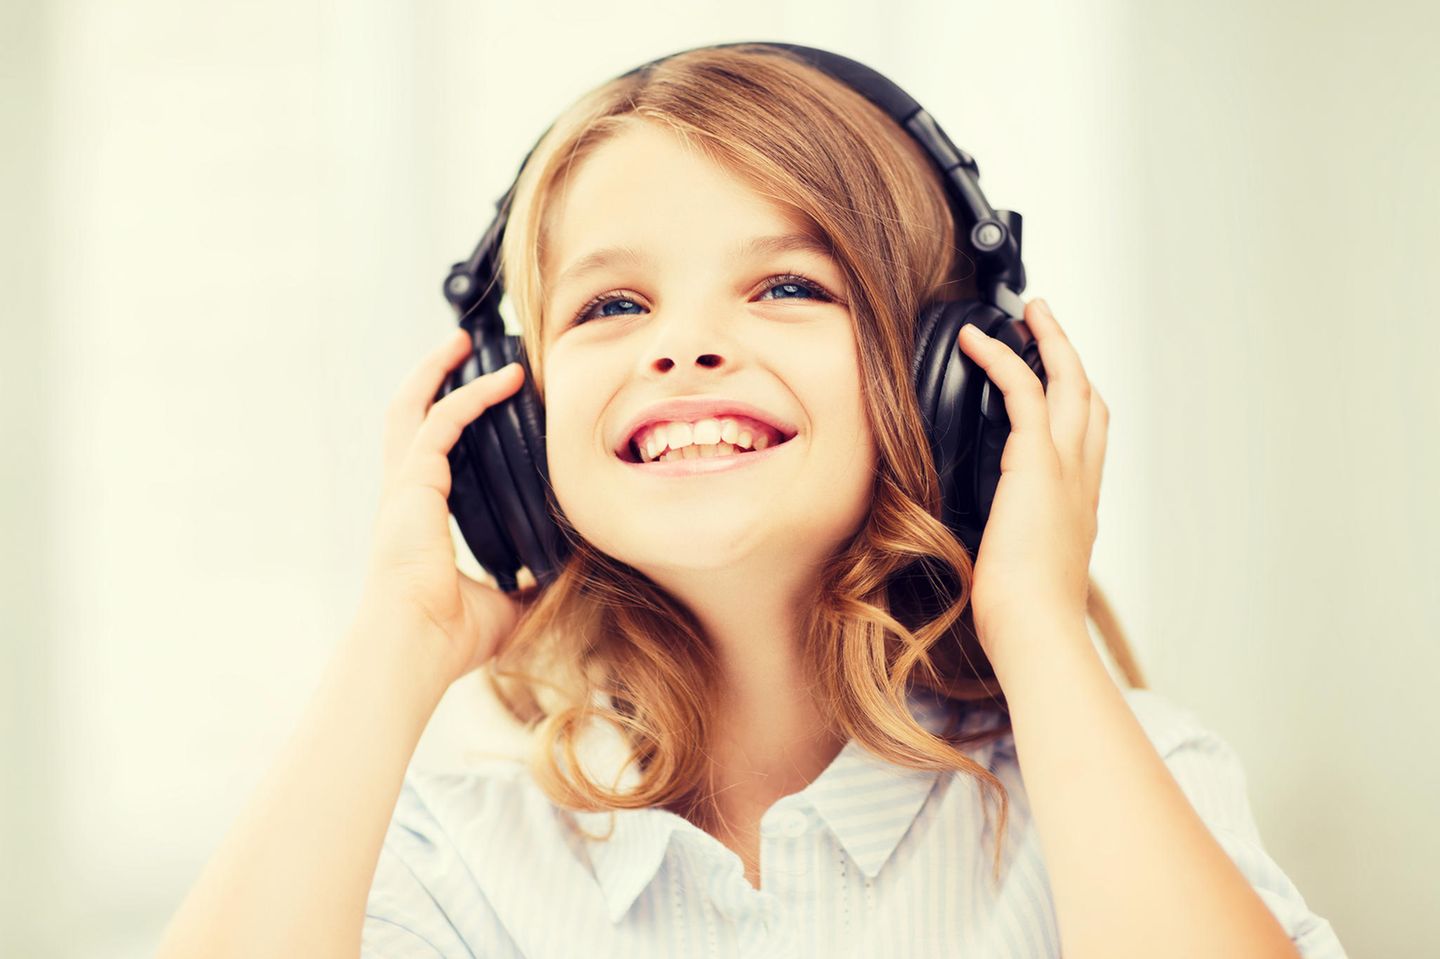 Kleines Mädchen hat Kopfhörer auf, Kopfhörer für Kinder, Kinder-Kopfhörer